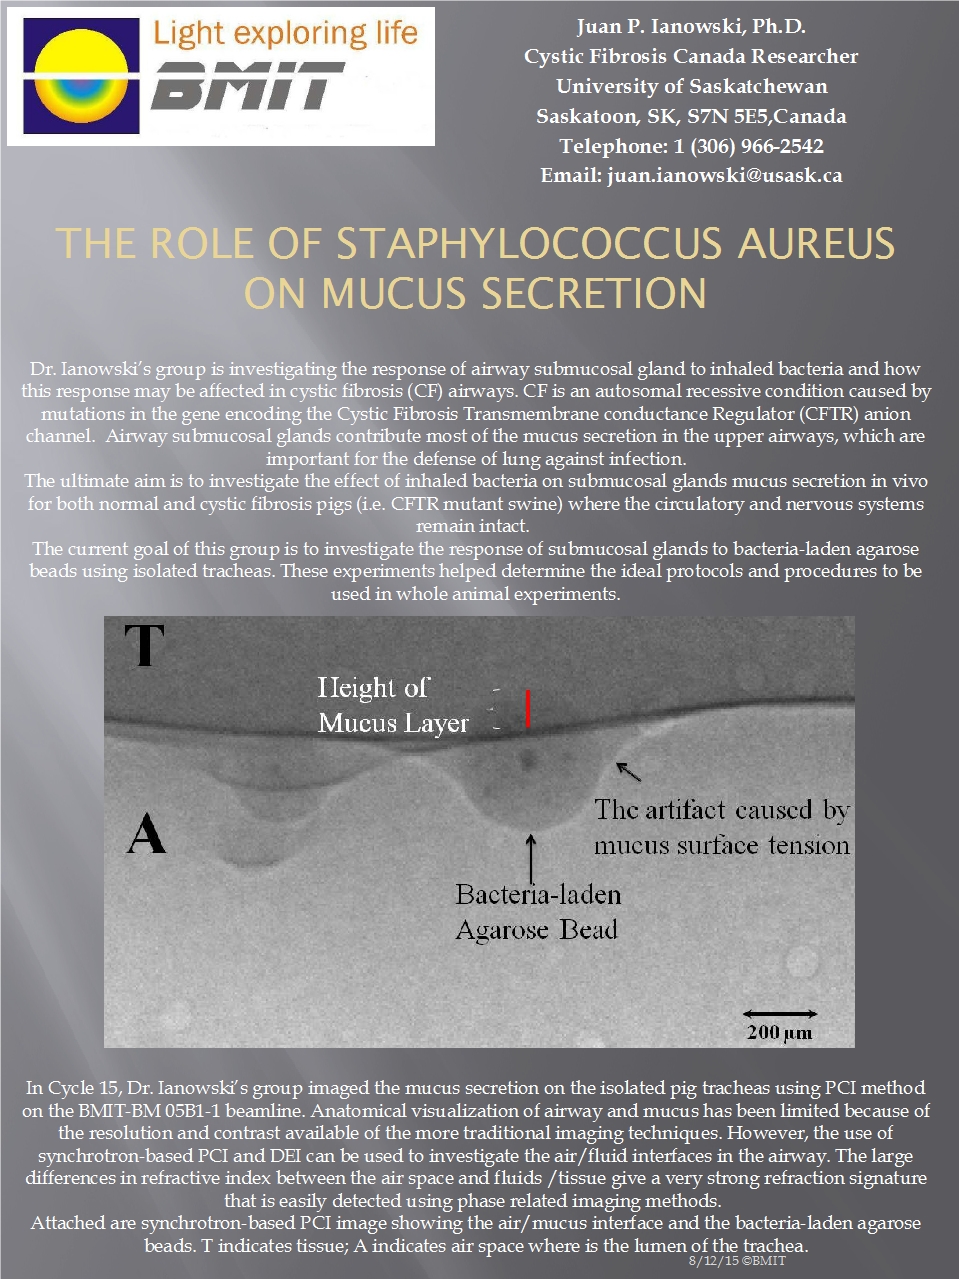 The Role of Staphylococcus Aureus on Mucus Secretion Image